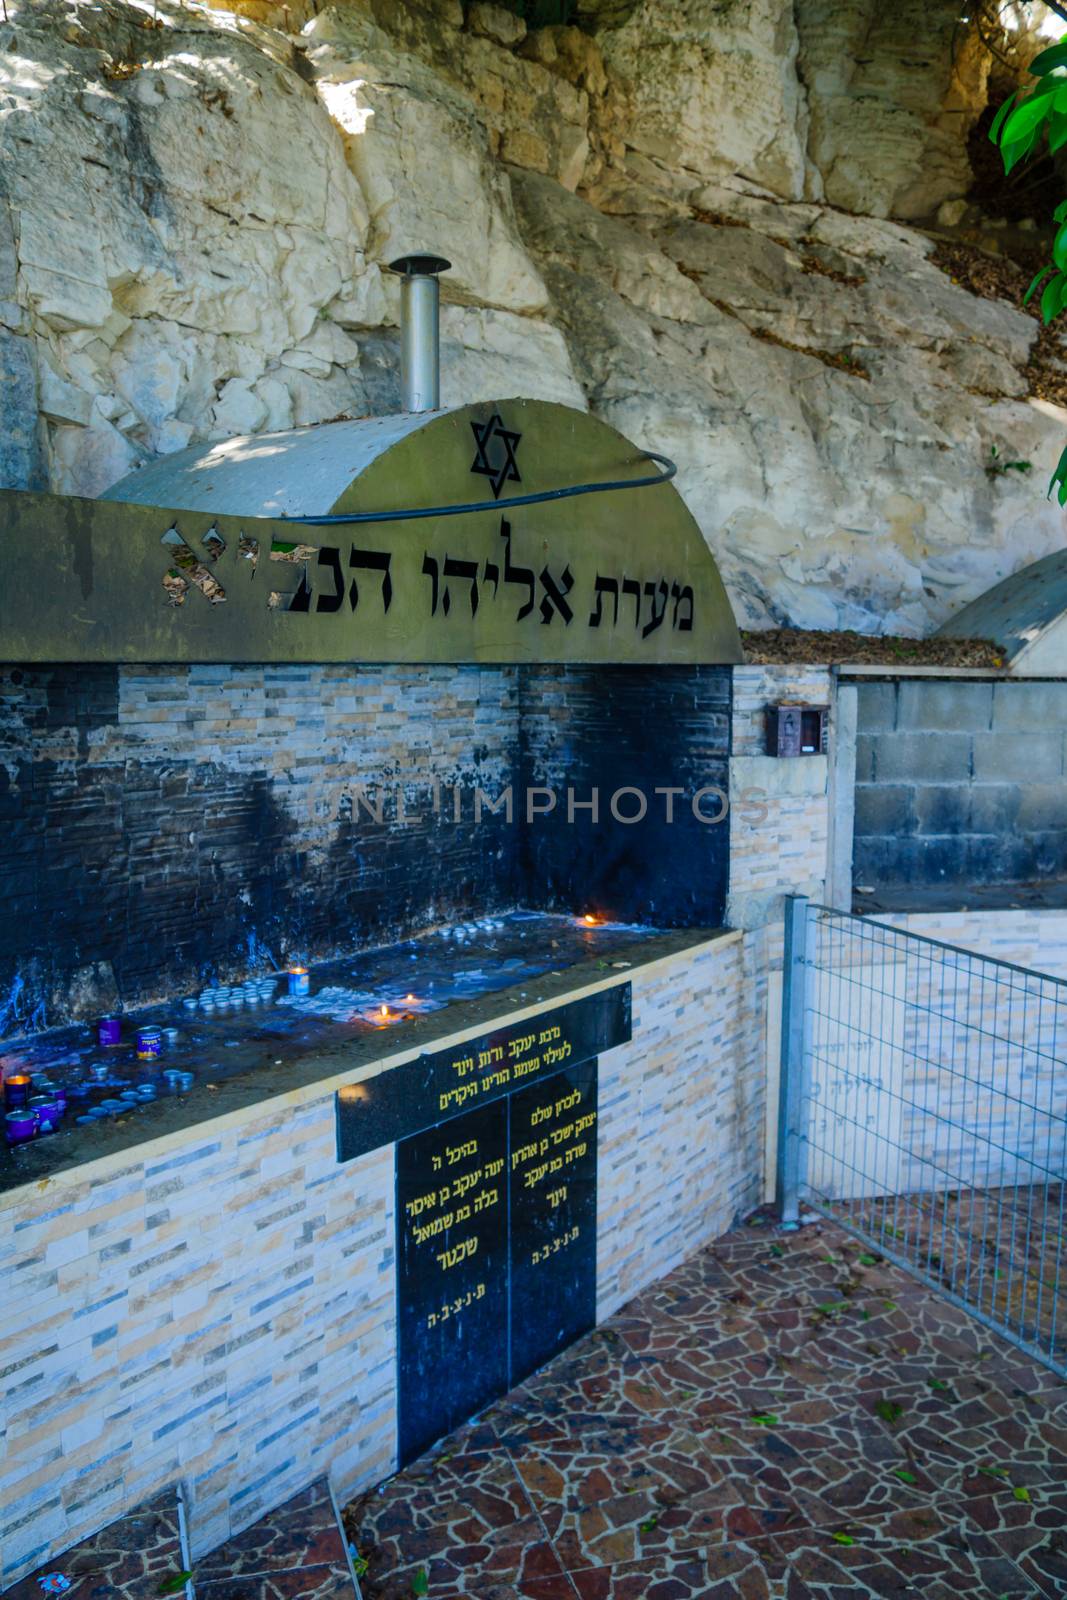 HAIFA, ISRAEL - SEPTEMBER 29, 2016: The external section of the Cave of Elijah perimeter, in Haifa, Israel